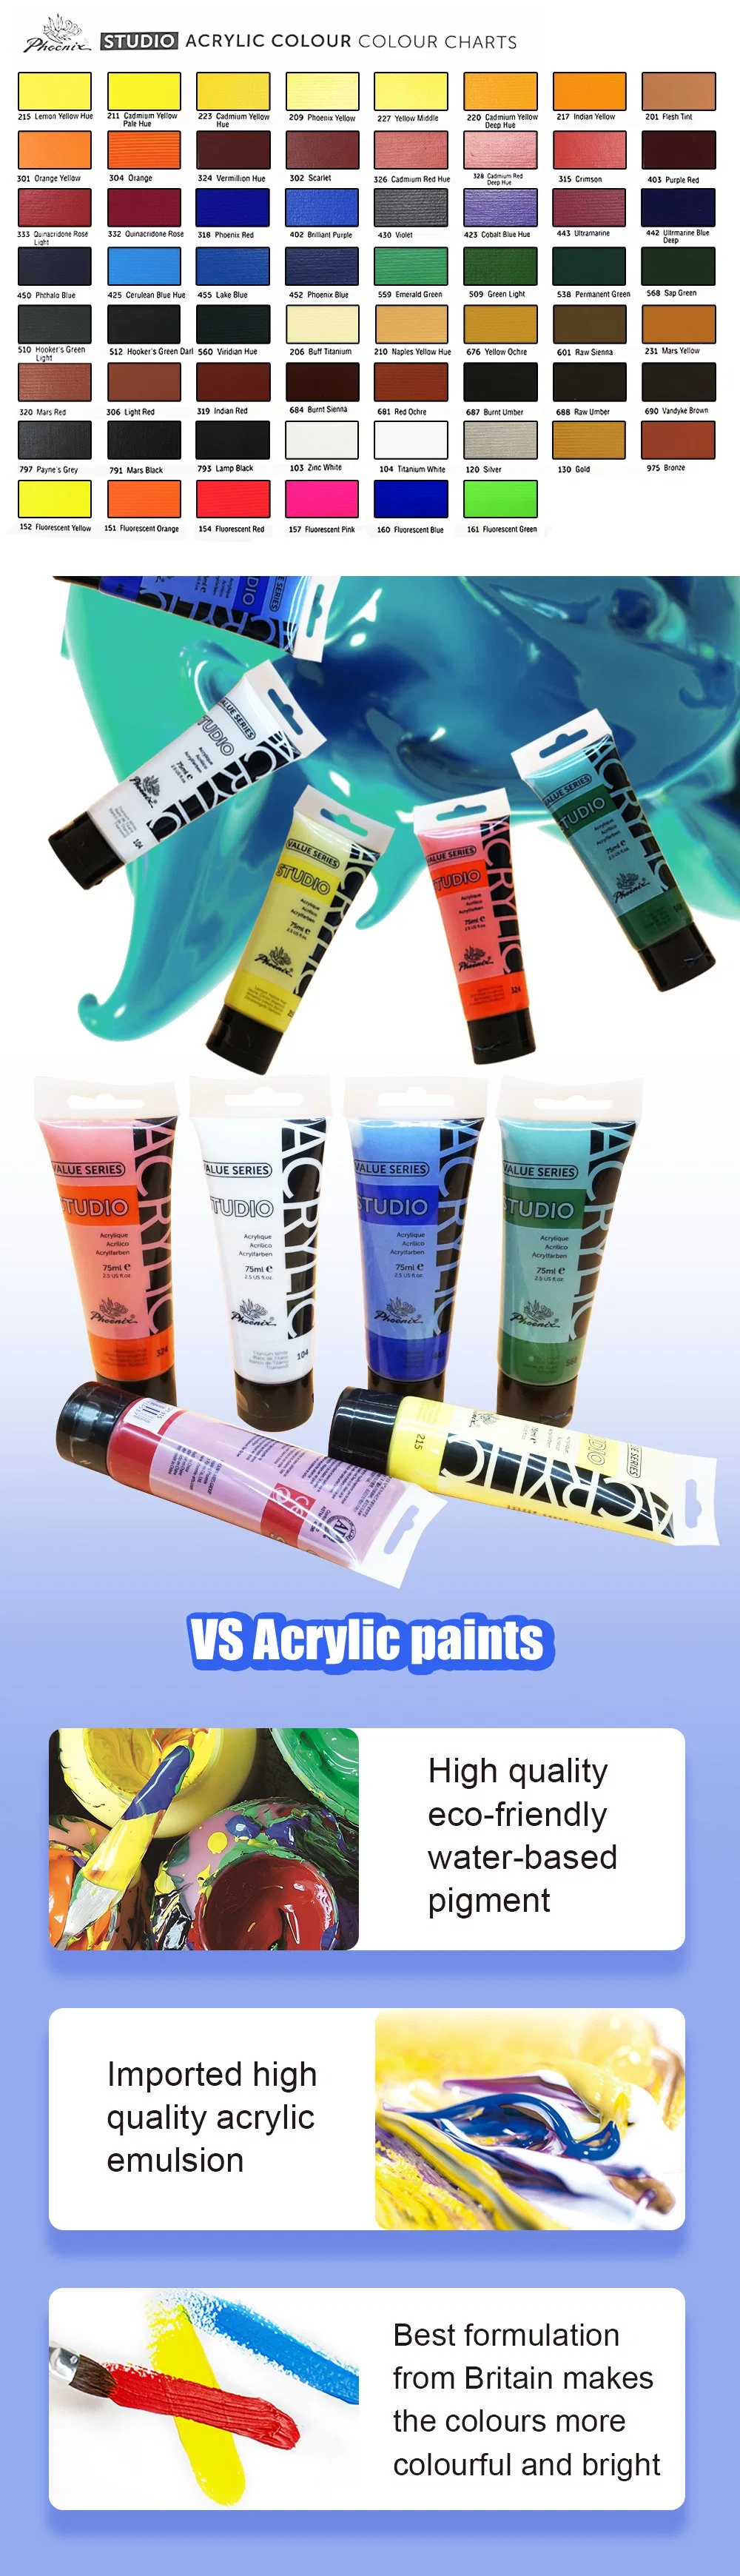 Hot Sale Acrylic Paint Colors 500ml Studio Acrylic Color for Students